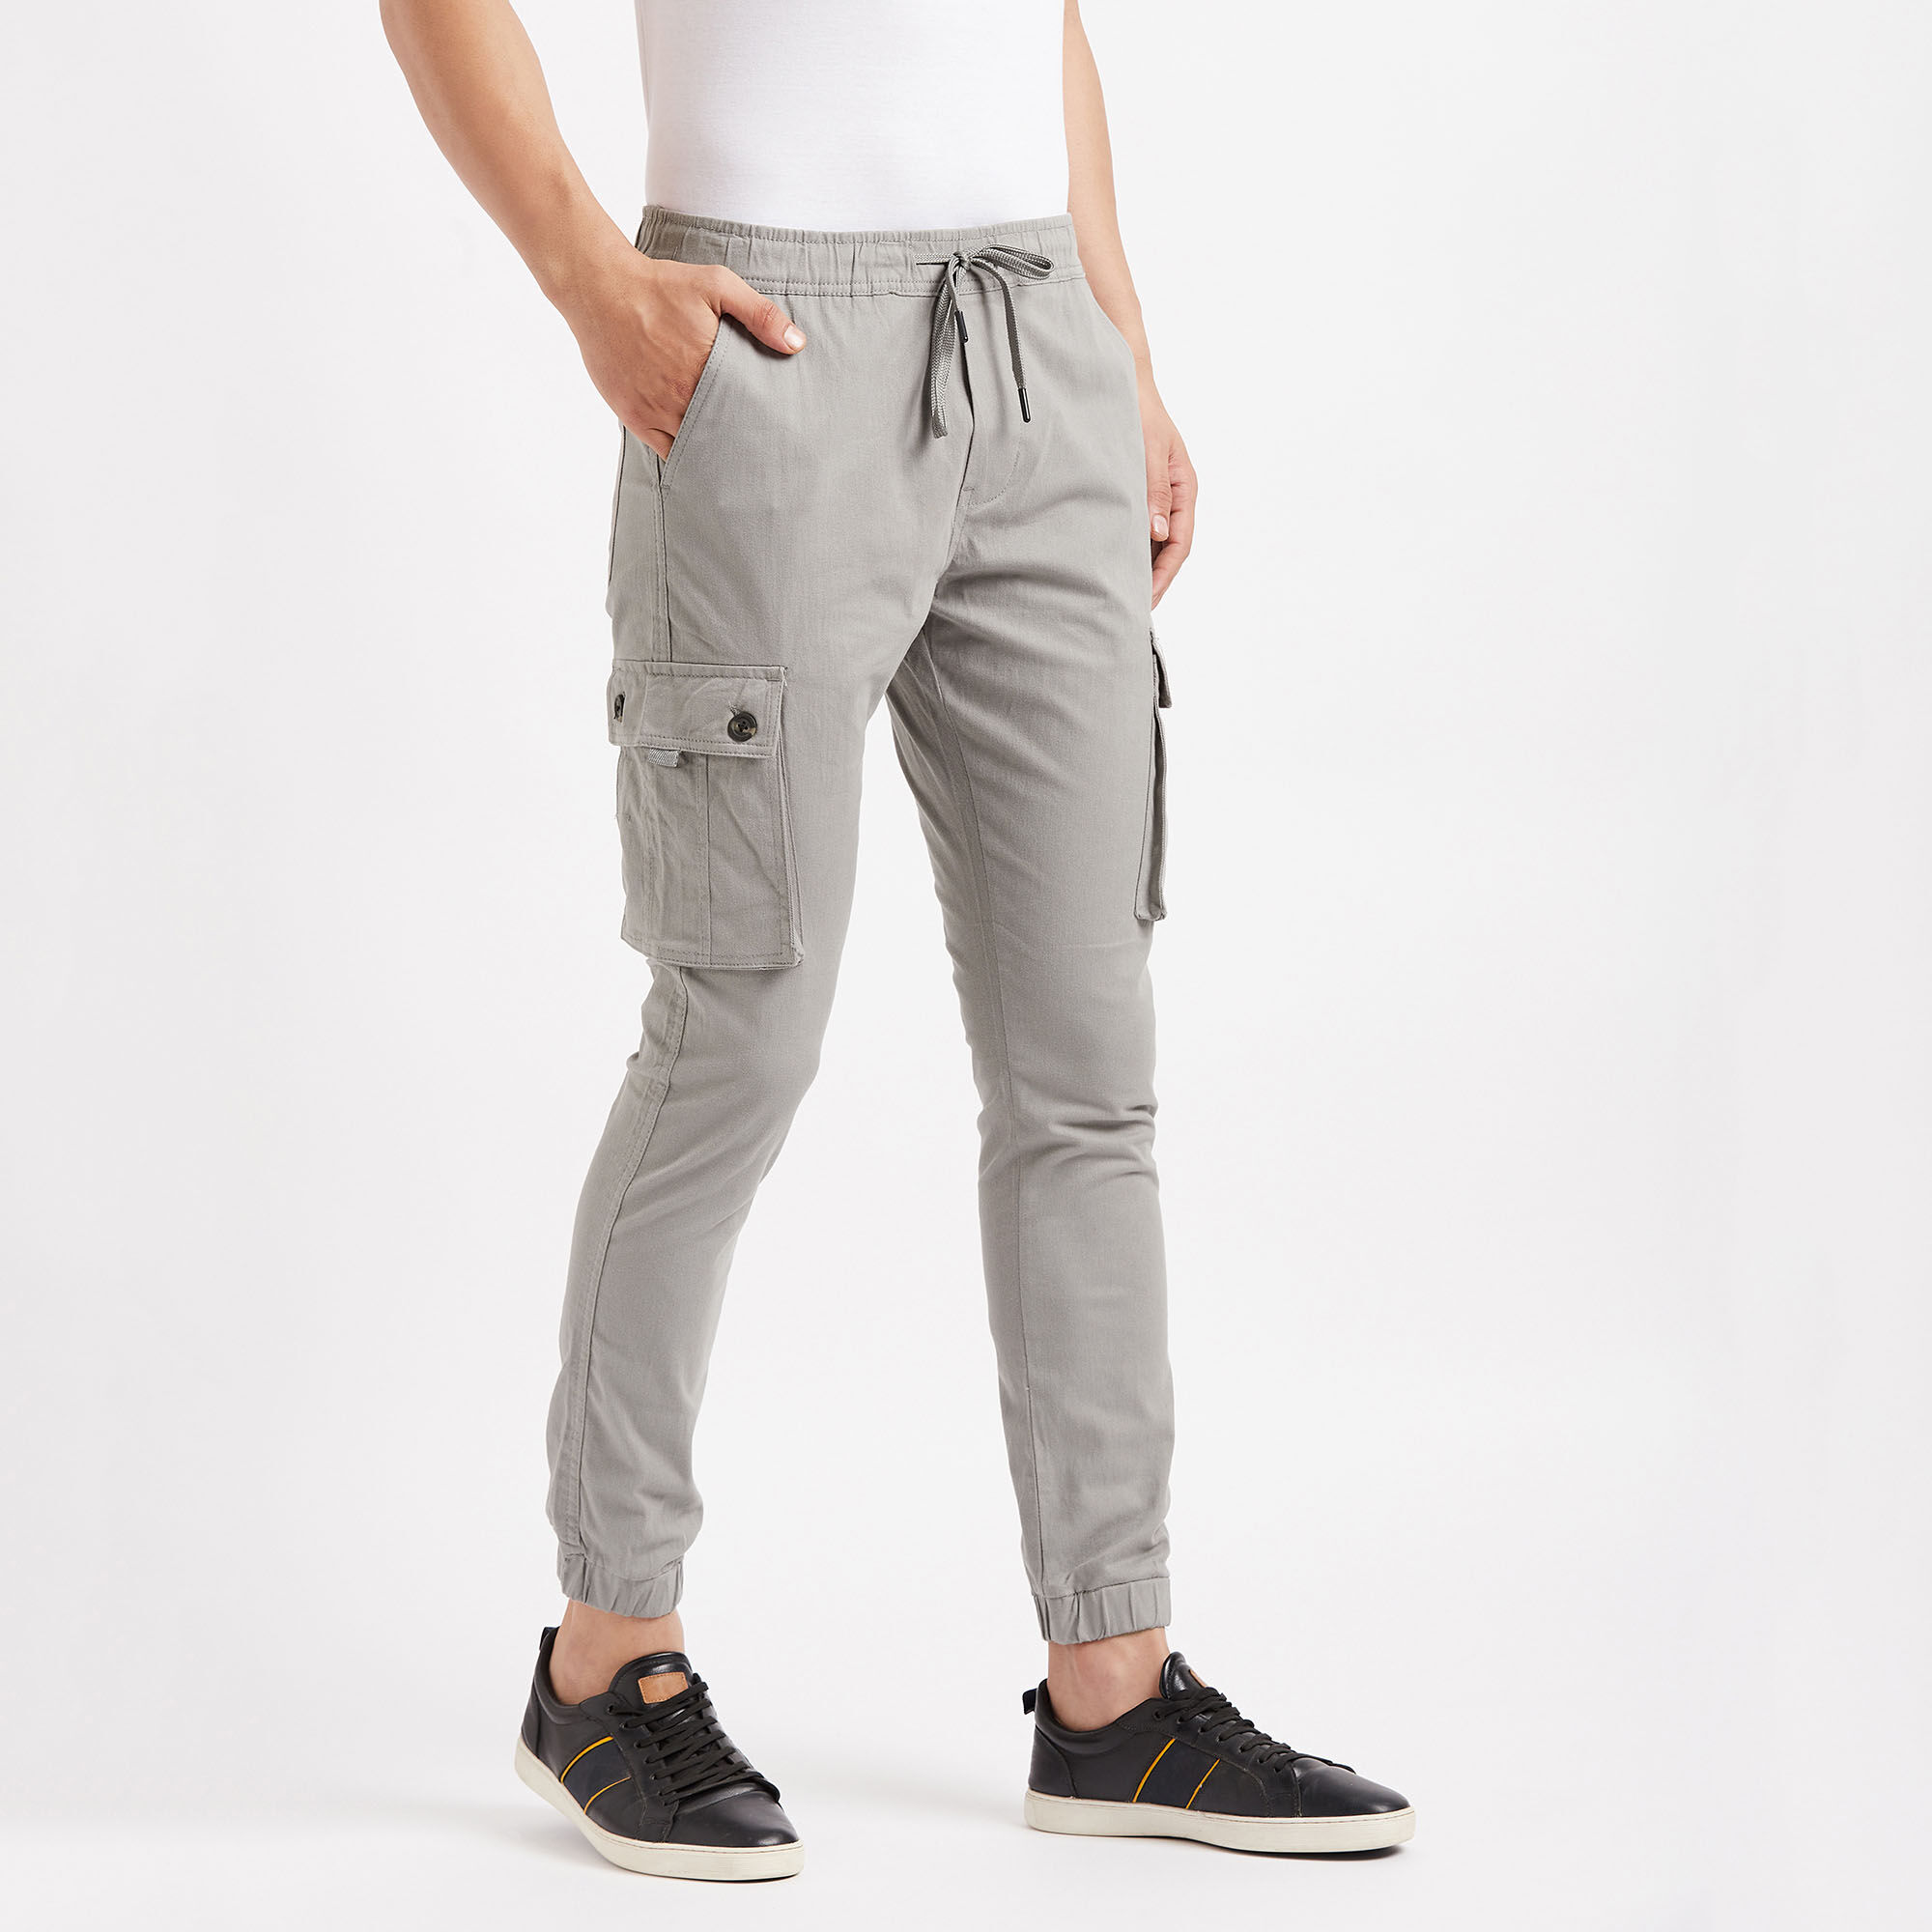 Nike Golf REPEL POCKET PANT  Outdoor trousers  driftwoodbeige   Zalandoie